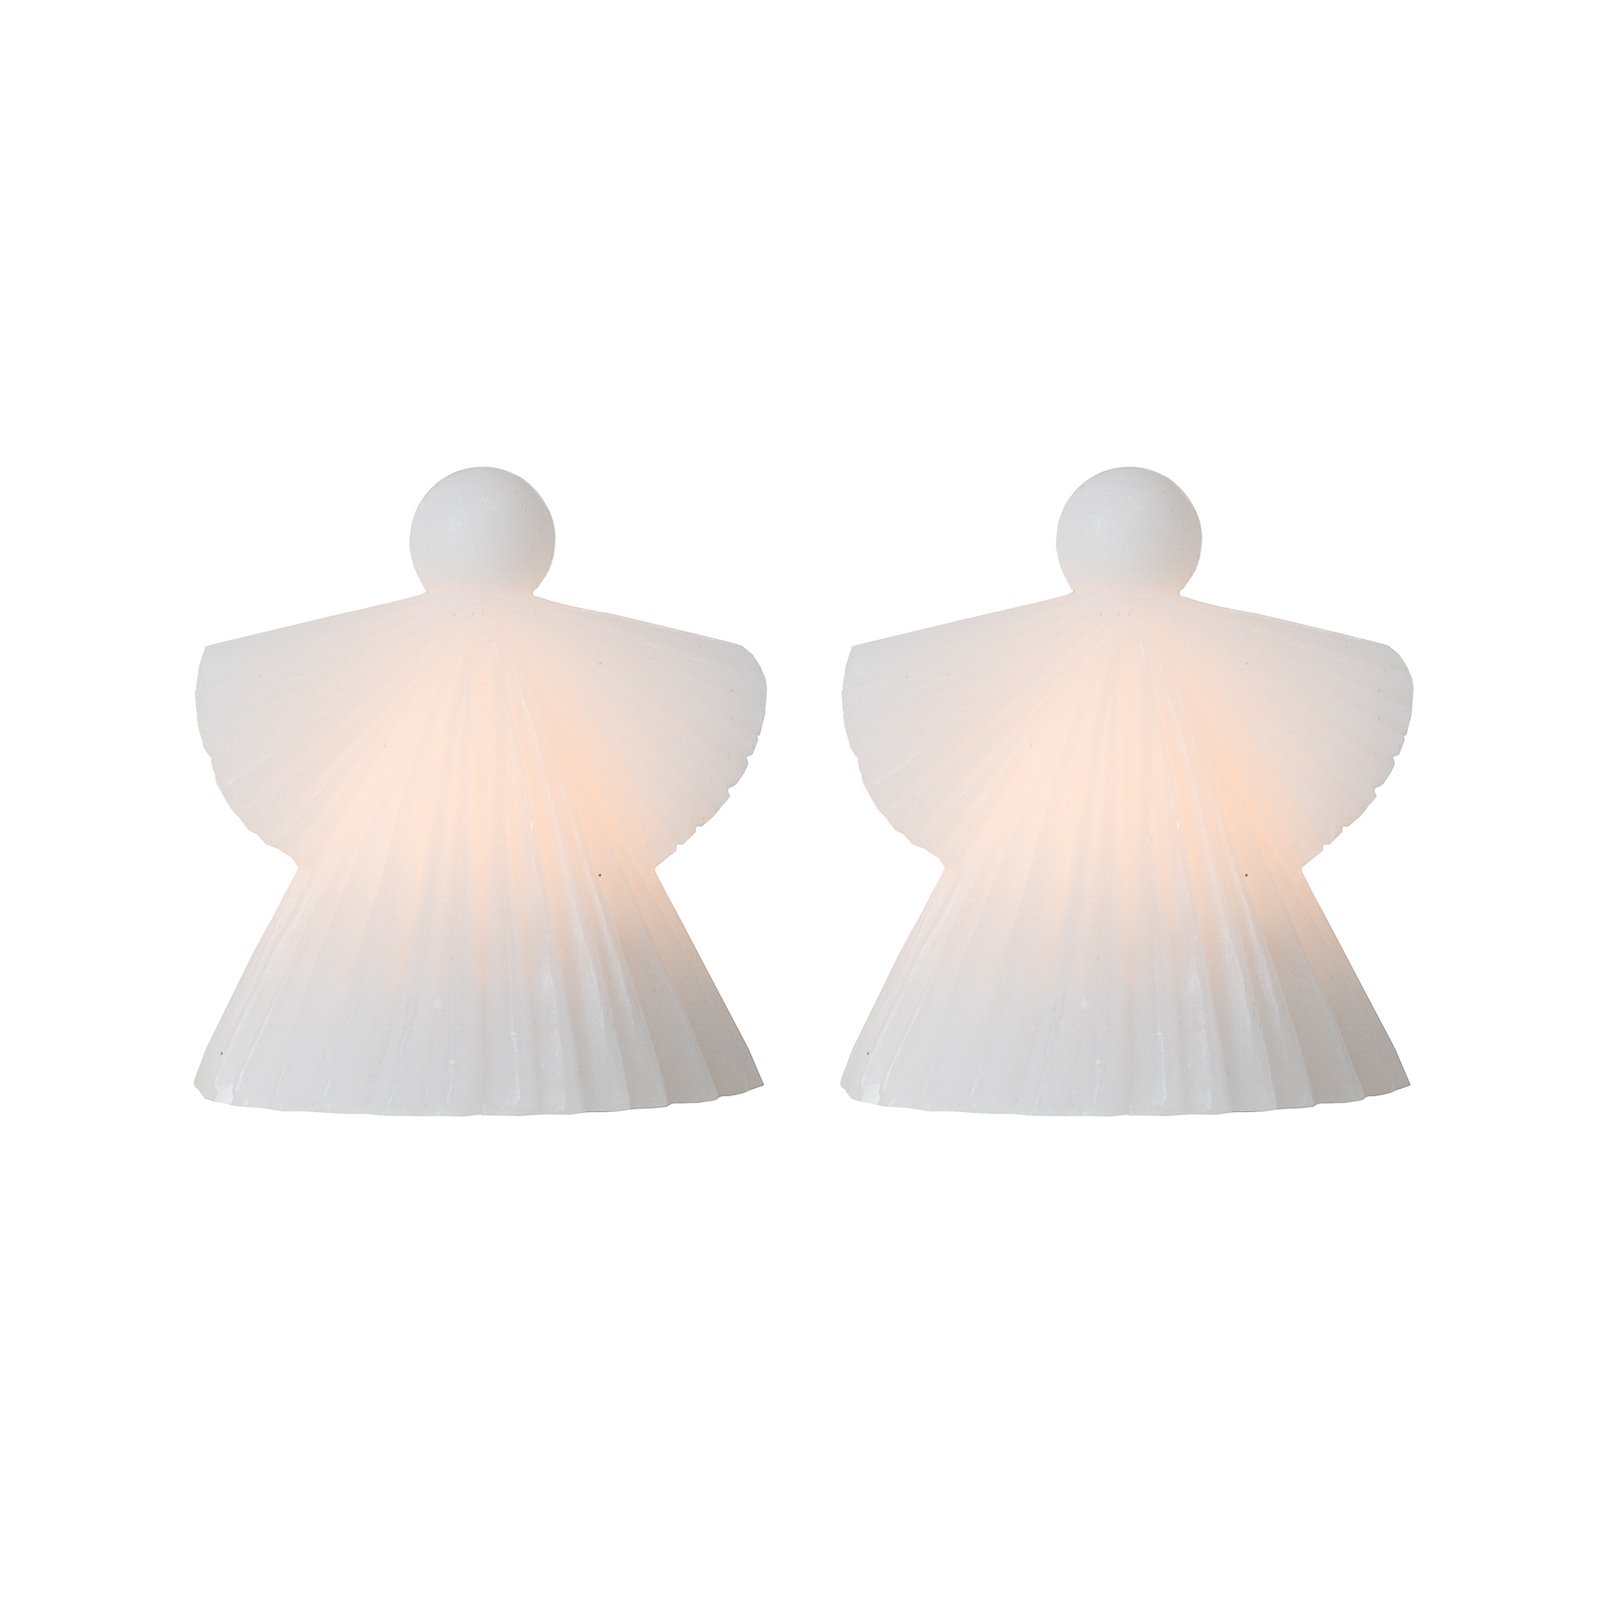 Asta LED decorative figure angel white wax 10cm, 2